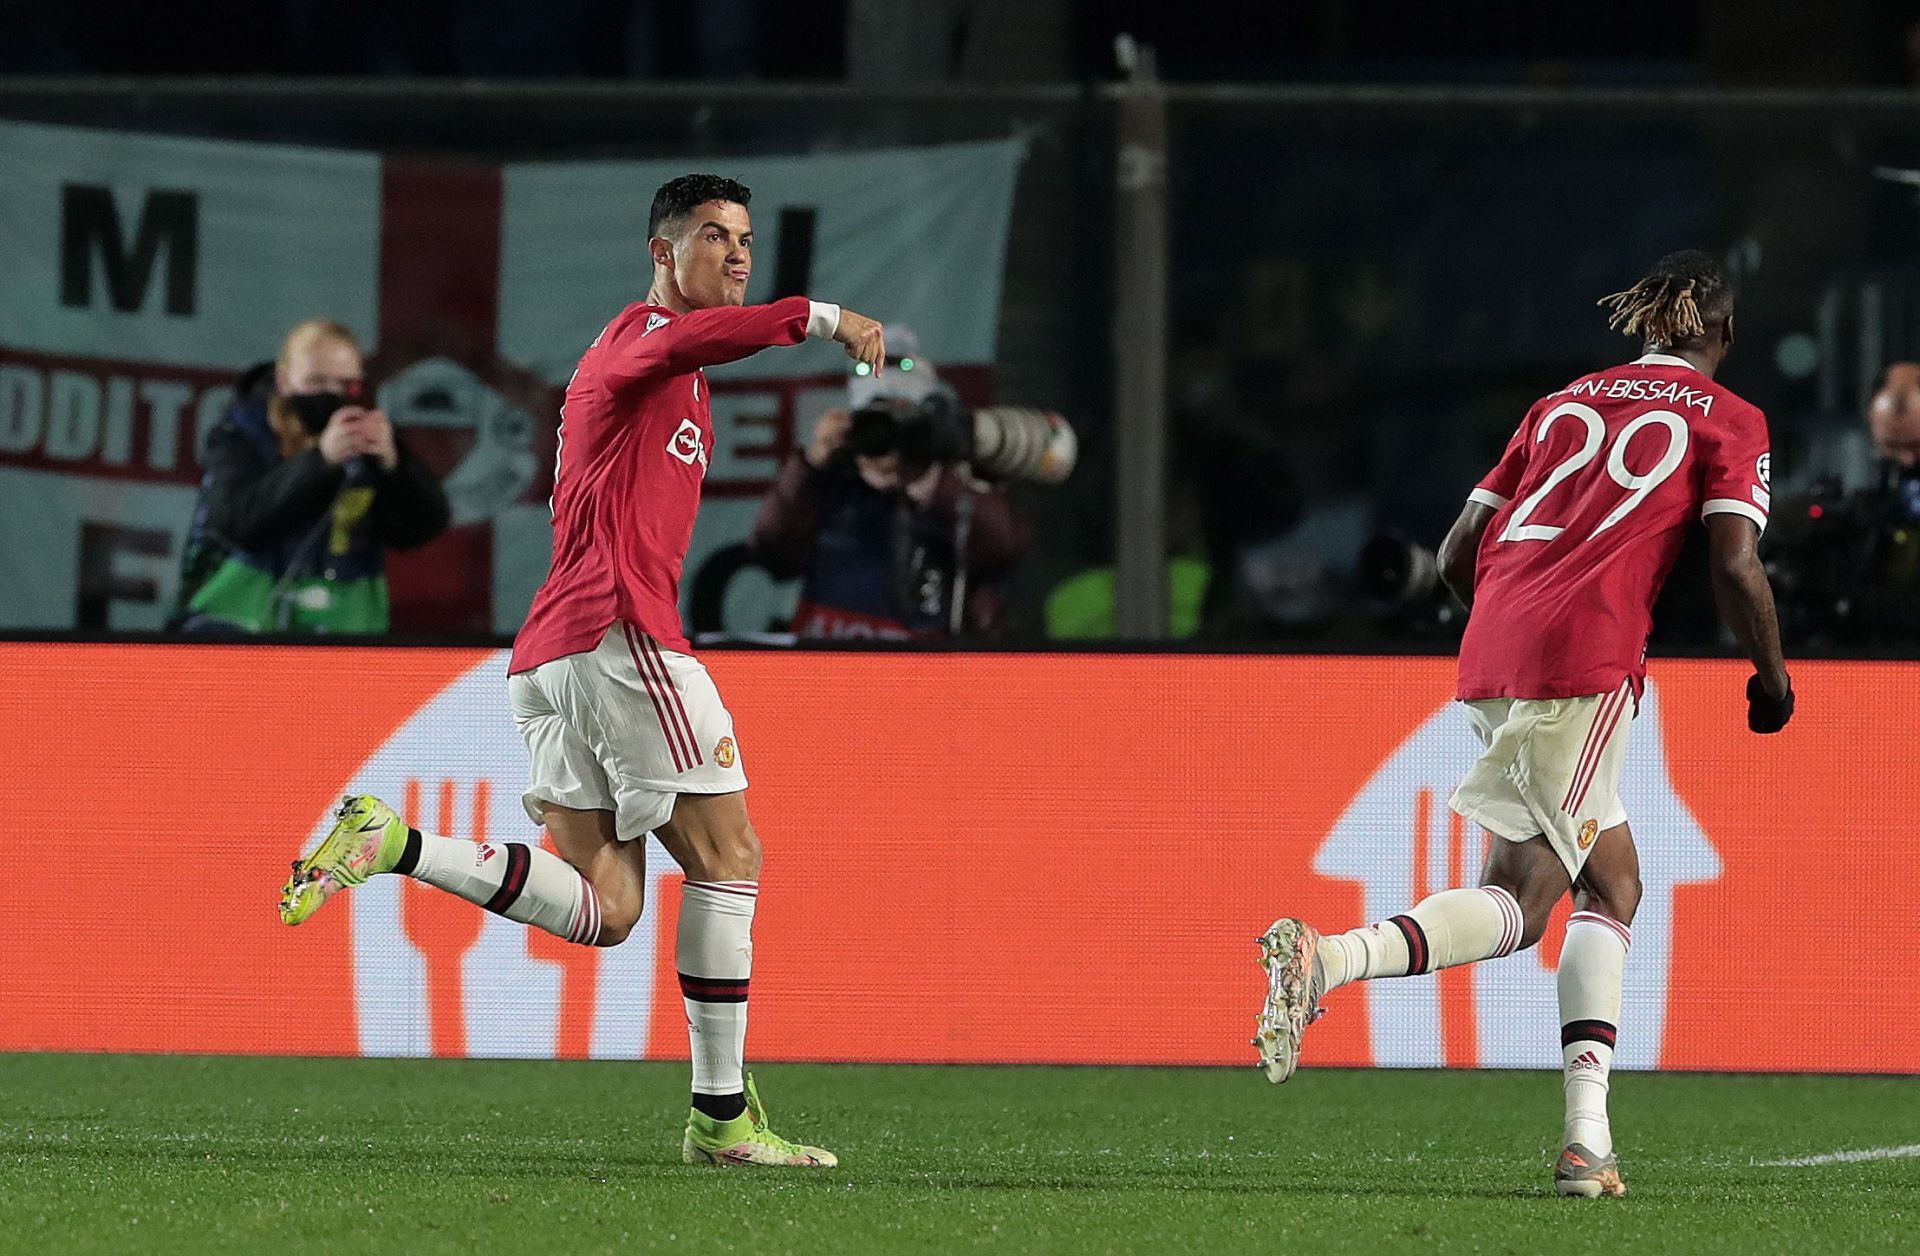 Cristiano Ronaldo scored a late equaliser as Manchester United drew 2-2 against Atalanta